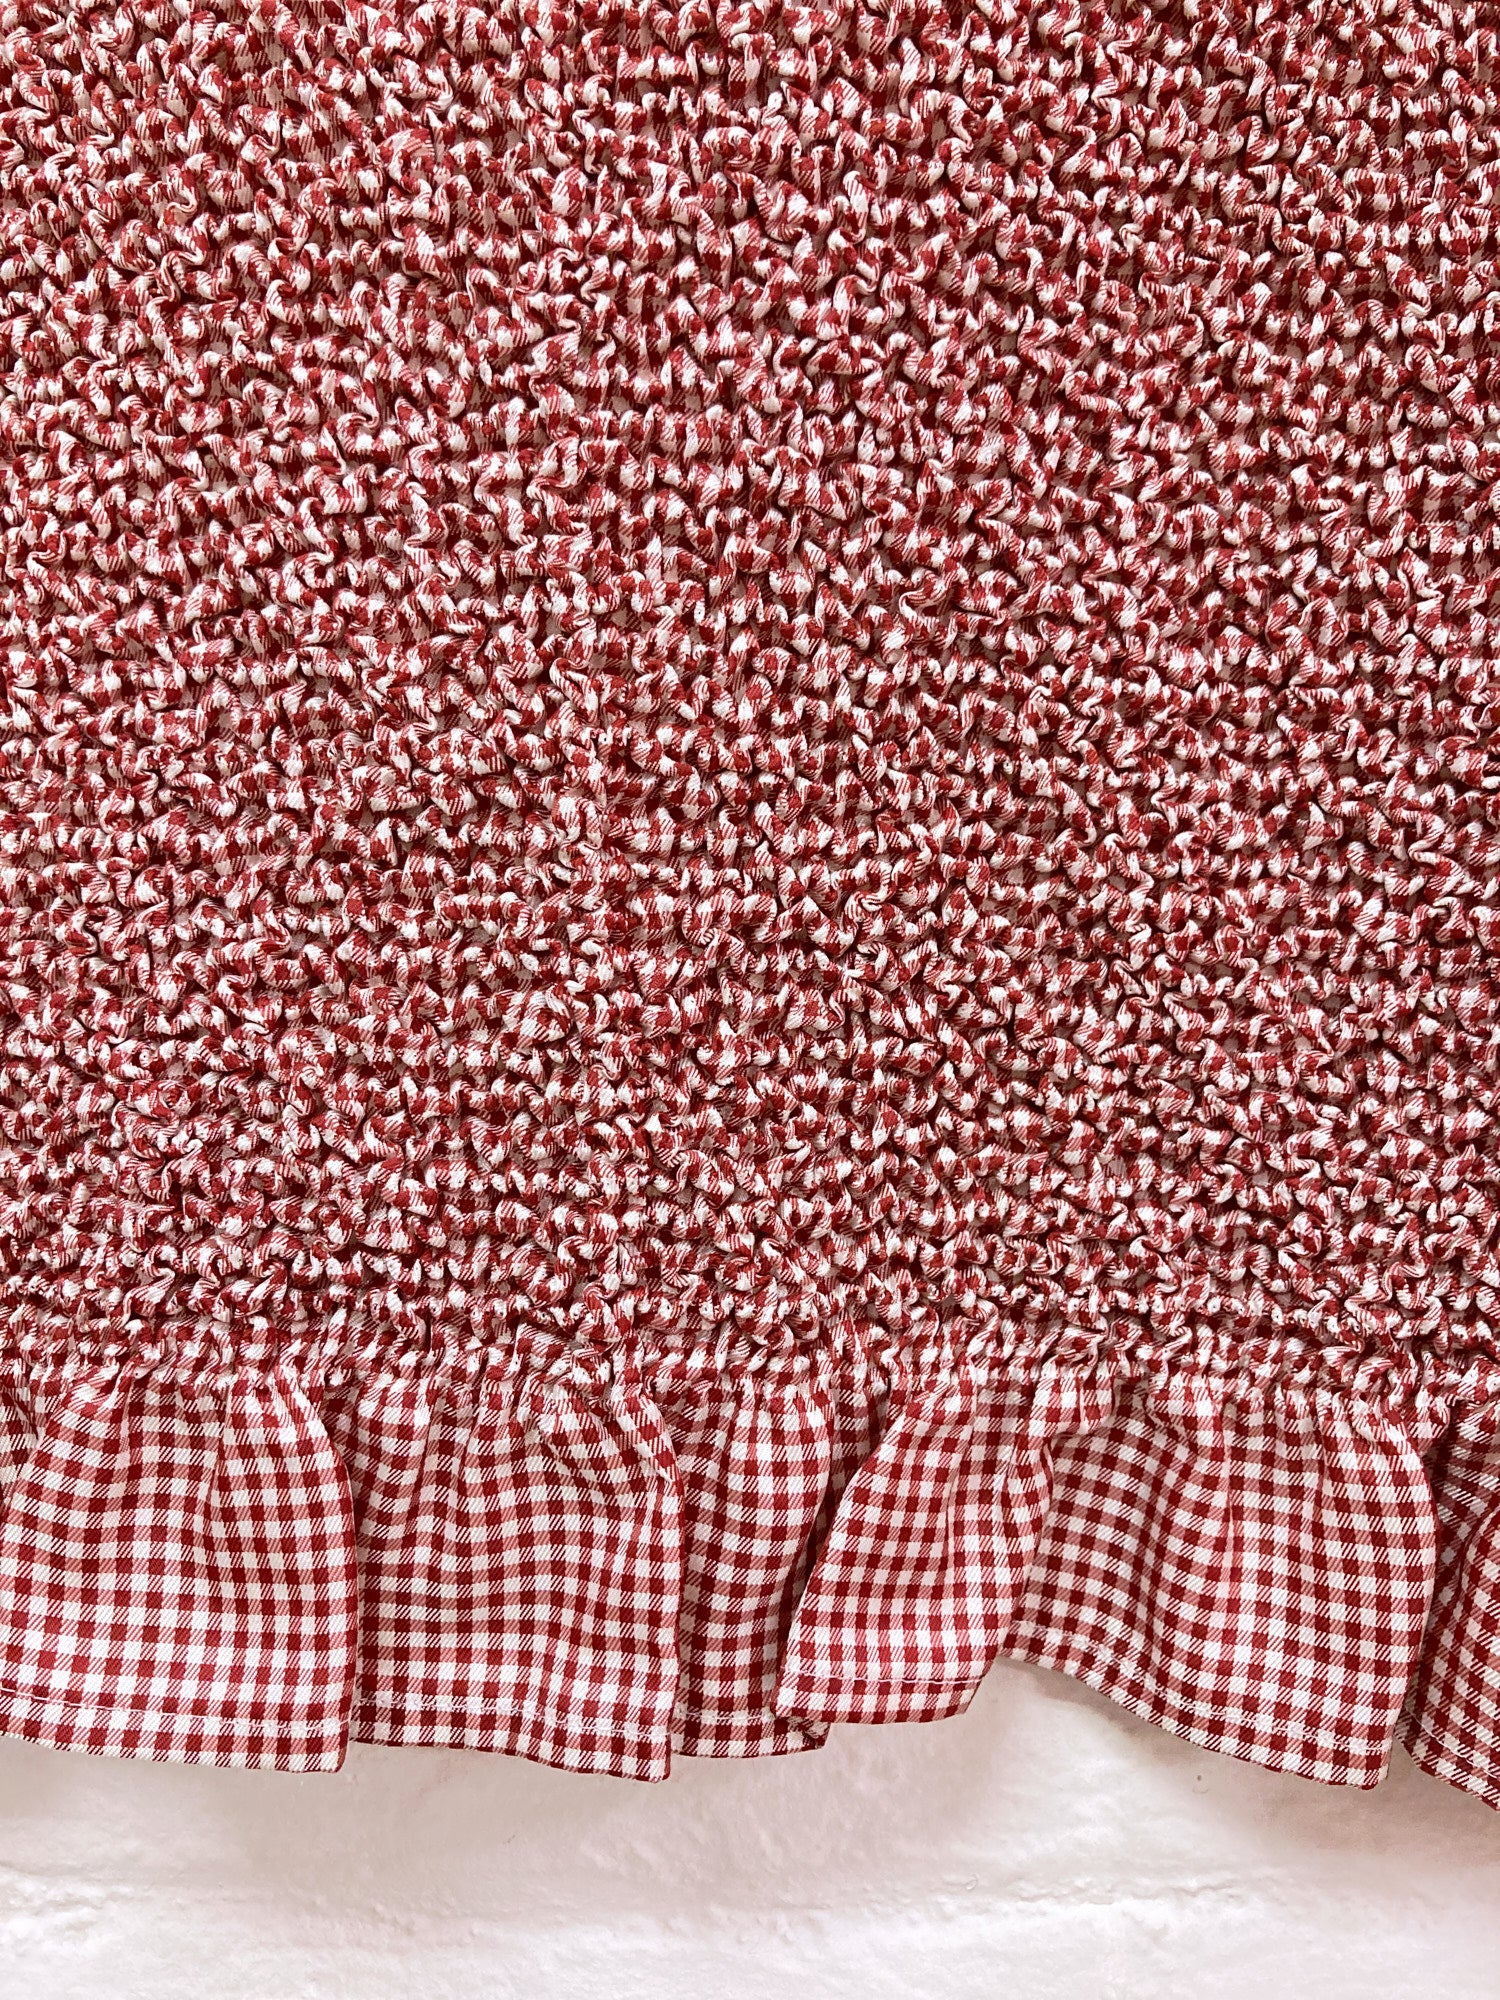 Yoshiki Hishinuma Peplum red gingham pleated top with hem and sleeve ruffle